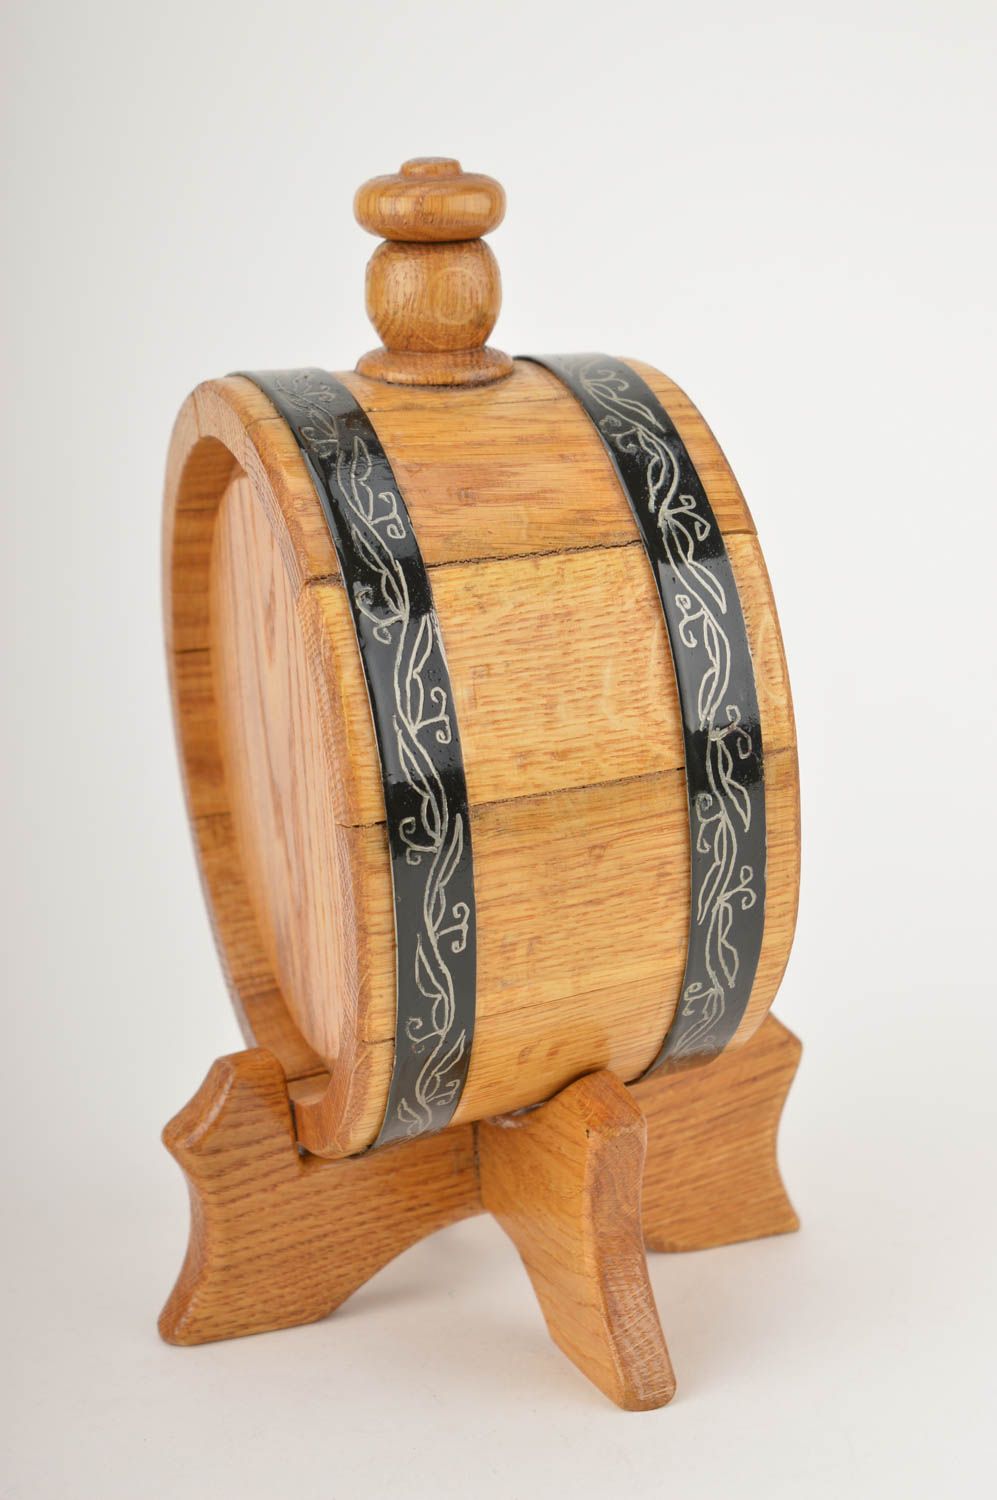 Handmade wooden barrel wine barrel wood decor interior barrel present for fiend photo 2